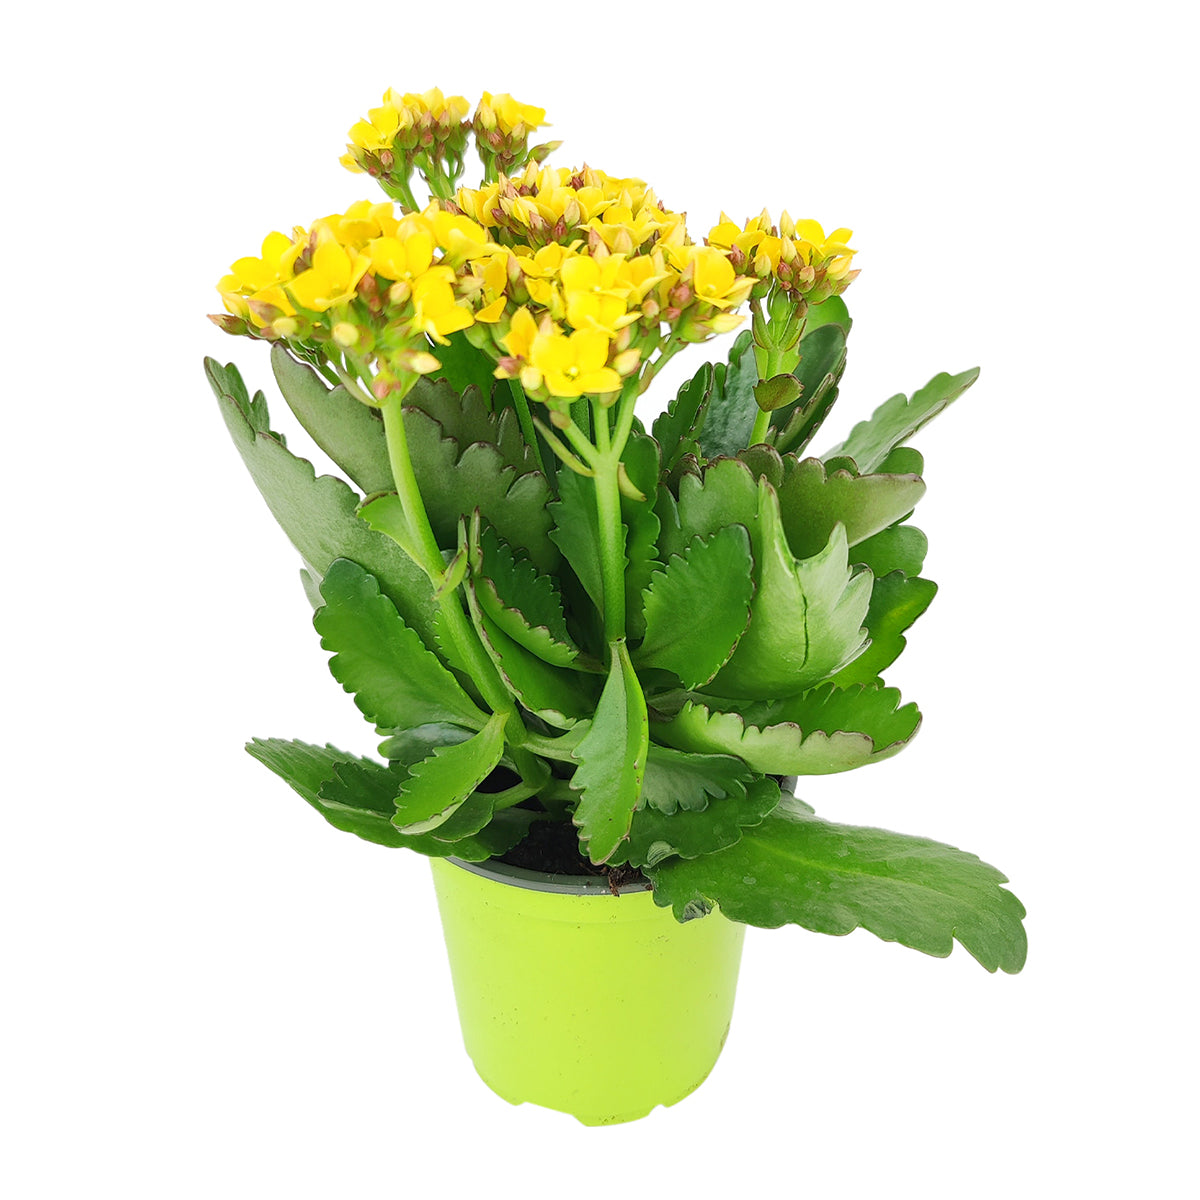 Kalanchoe blossfeldiana 'Calandiva Yellow'(4" Grower Pot) - Medium to Bright Light Houseplants for Home and Office Decoration - image 1 of 3